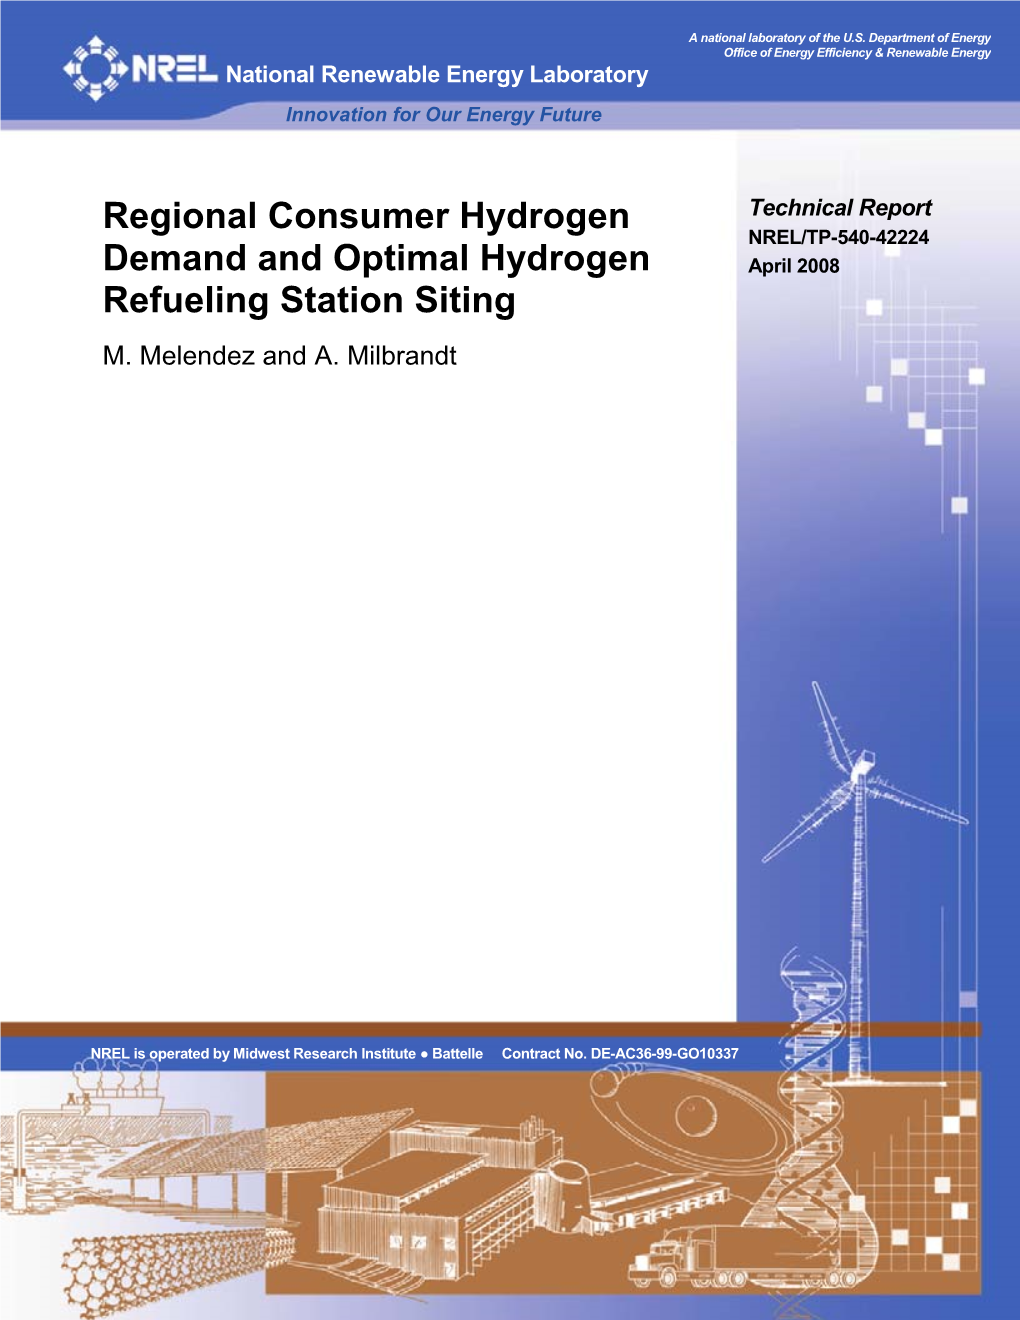 Regional Consumer Hydrogen Demand and Optimal Hydrogen Refueling Station Siting